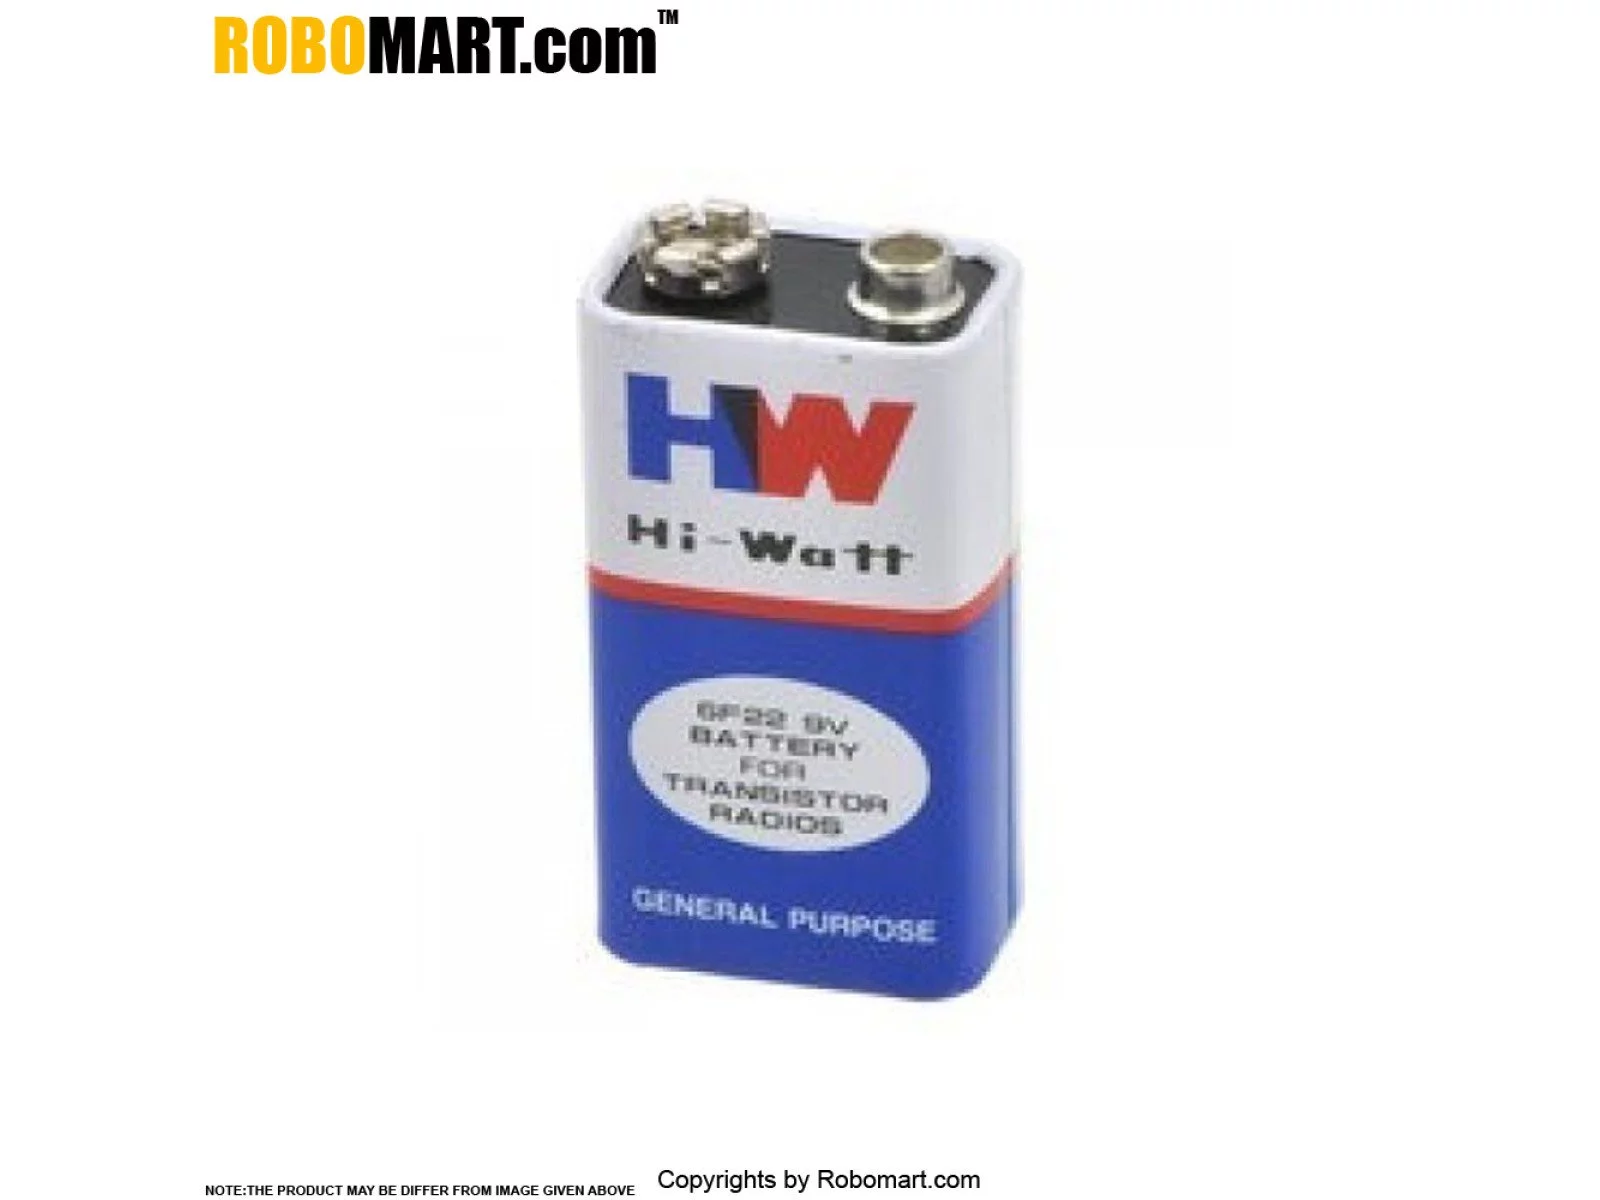 HW 9 Volt Battery